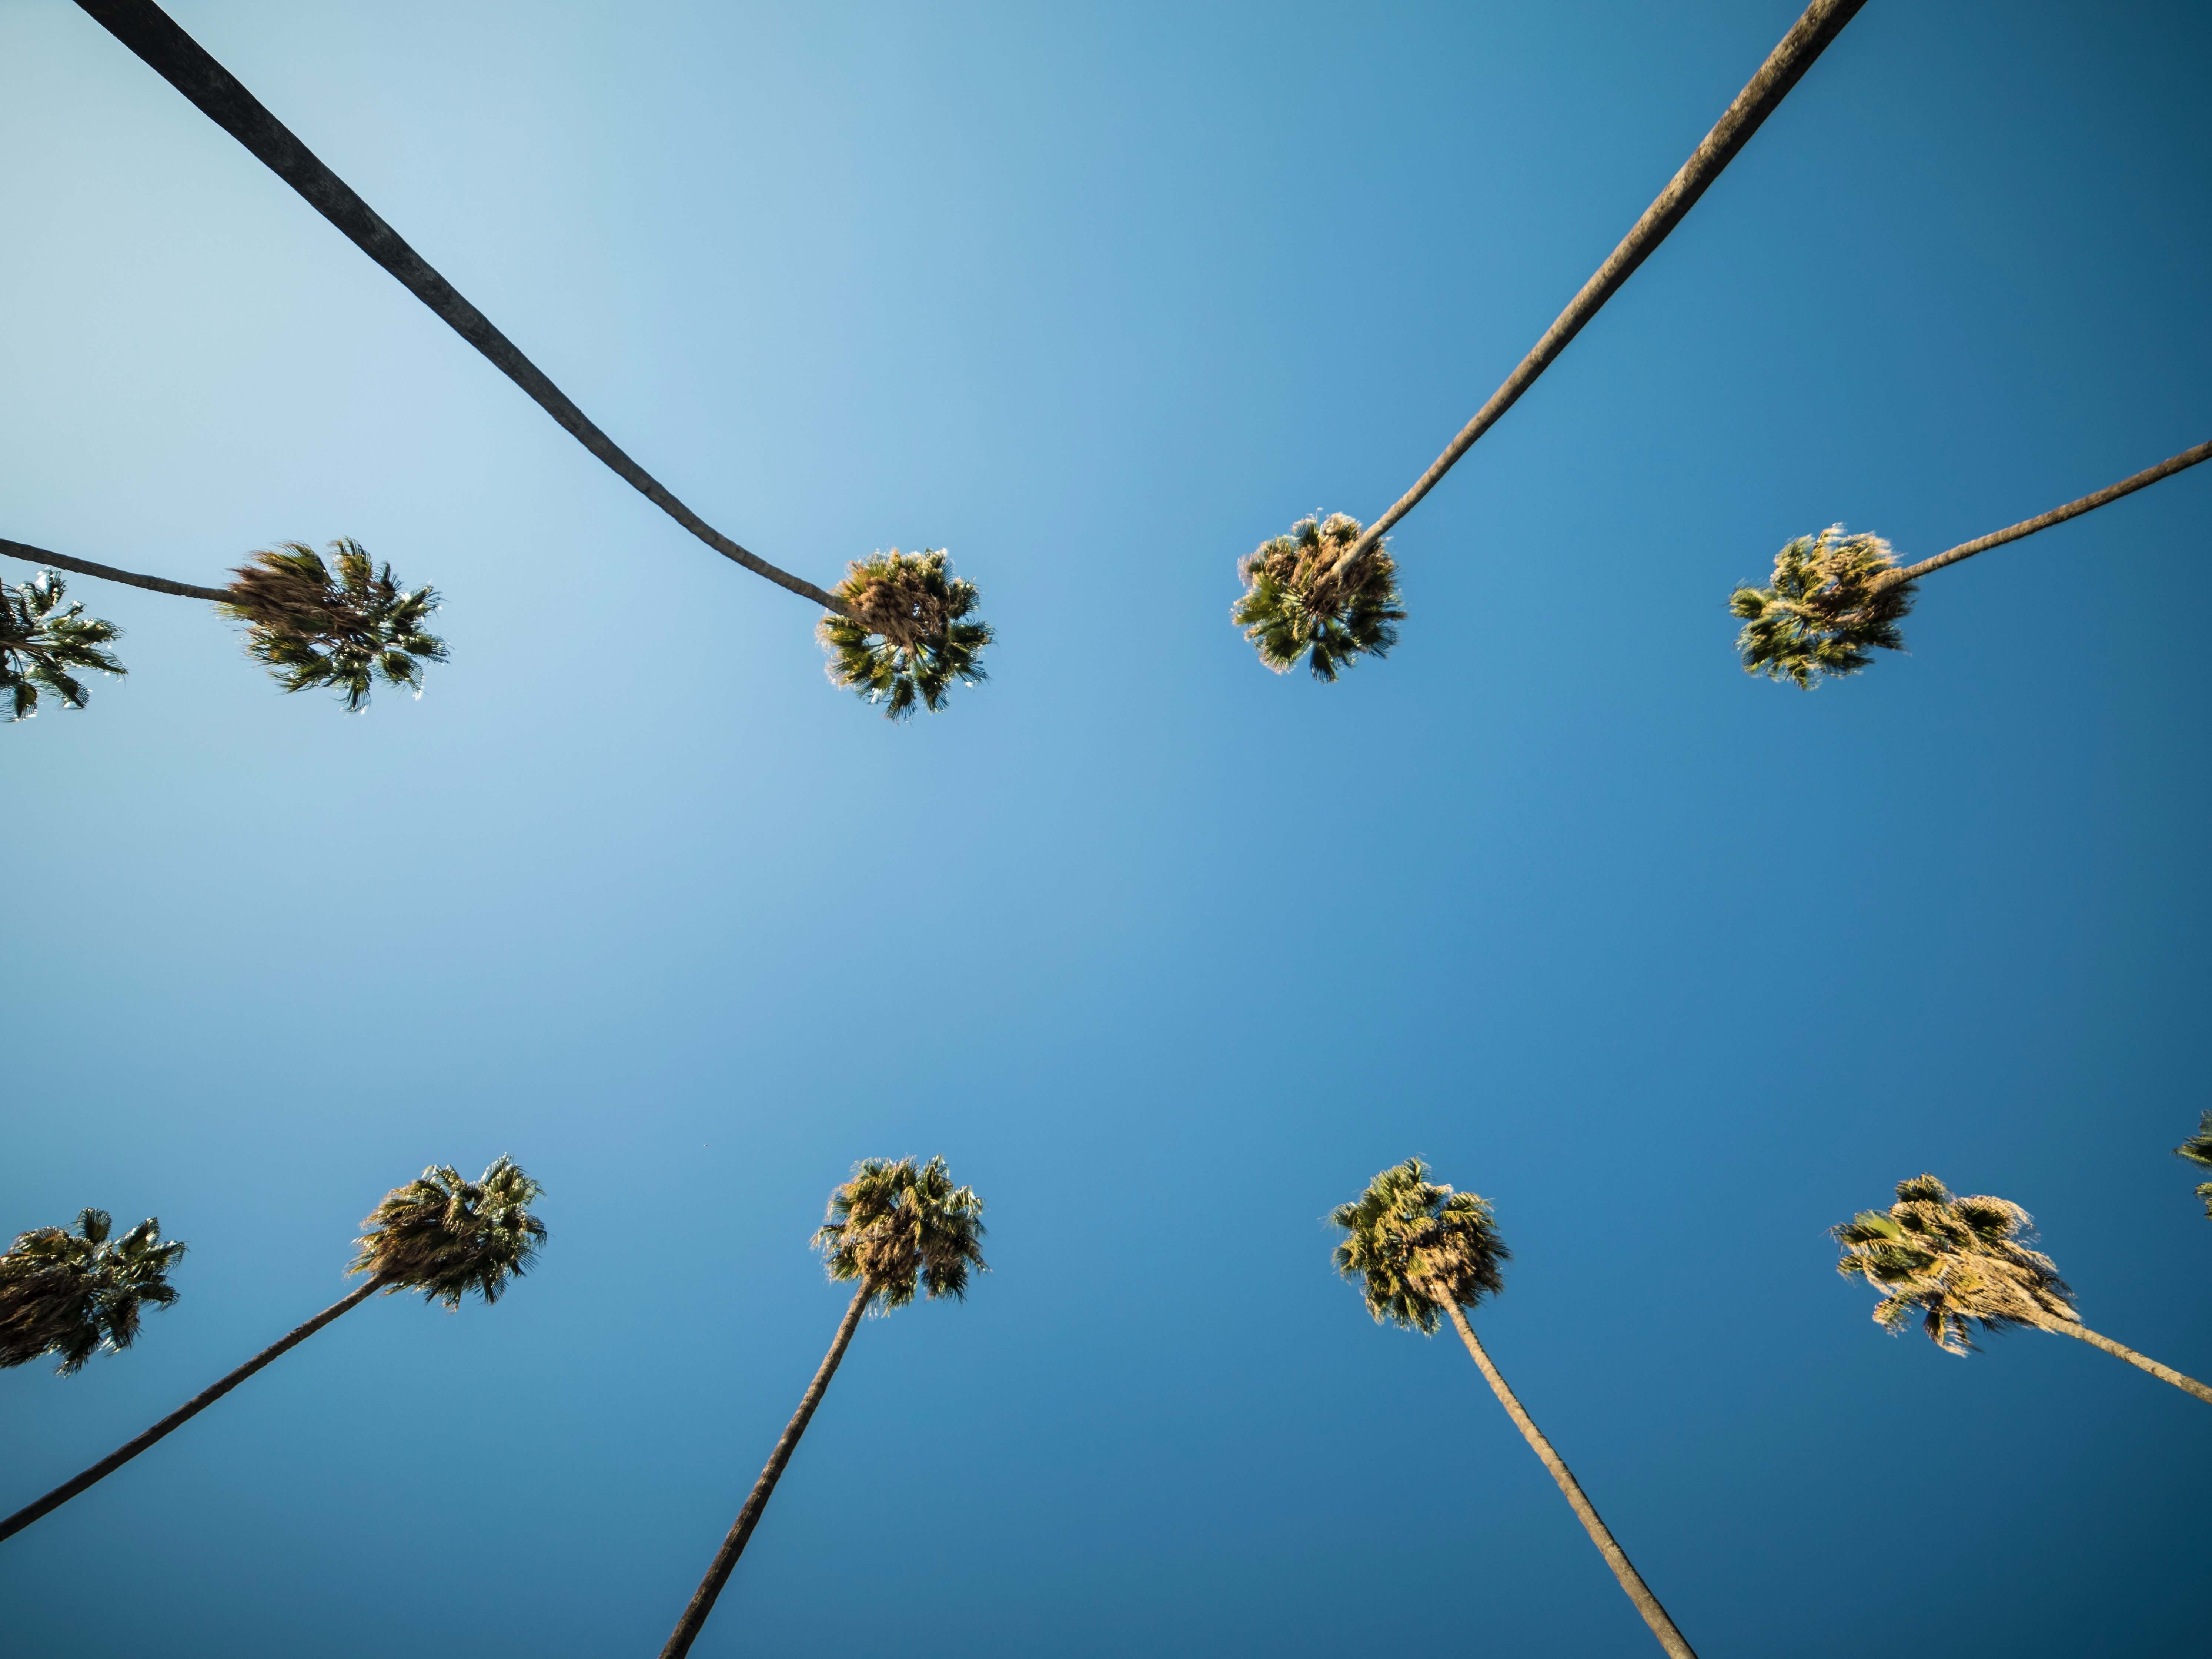 skyward image of palm trees